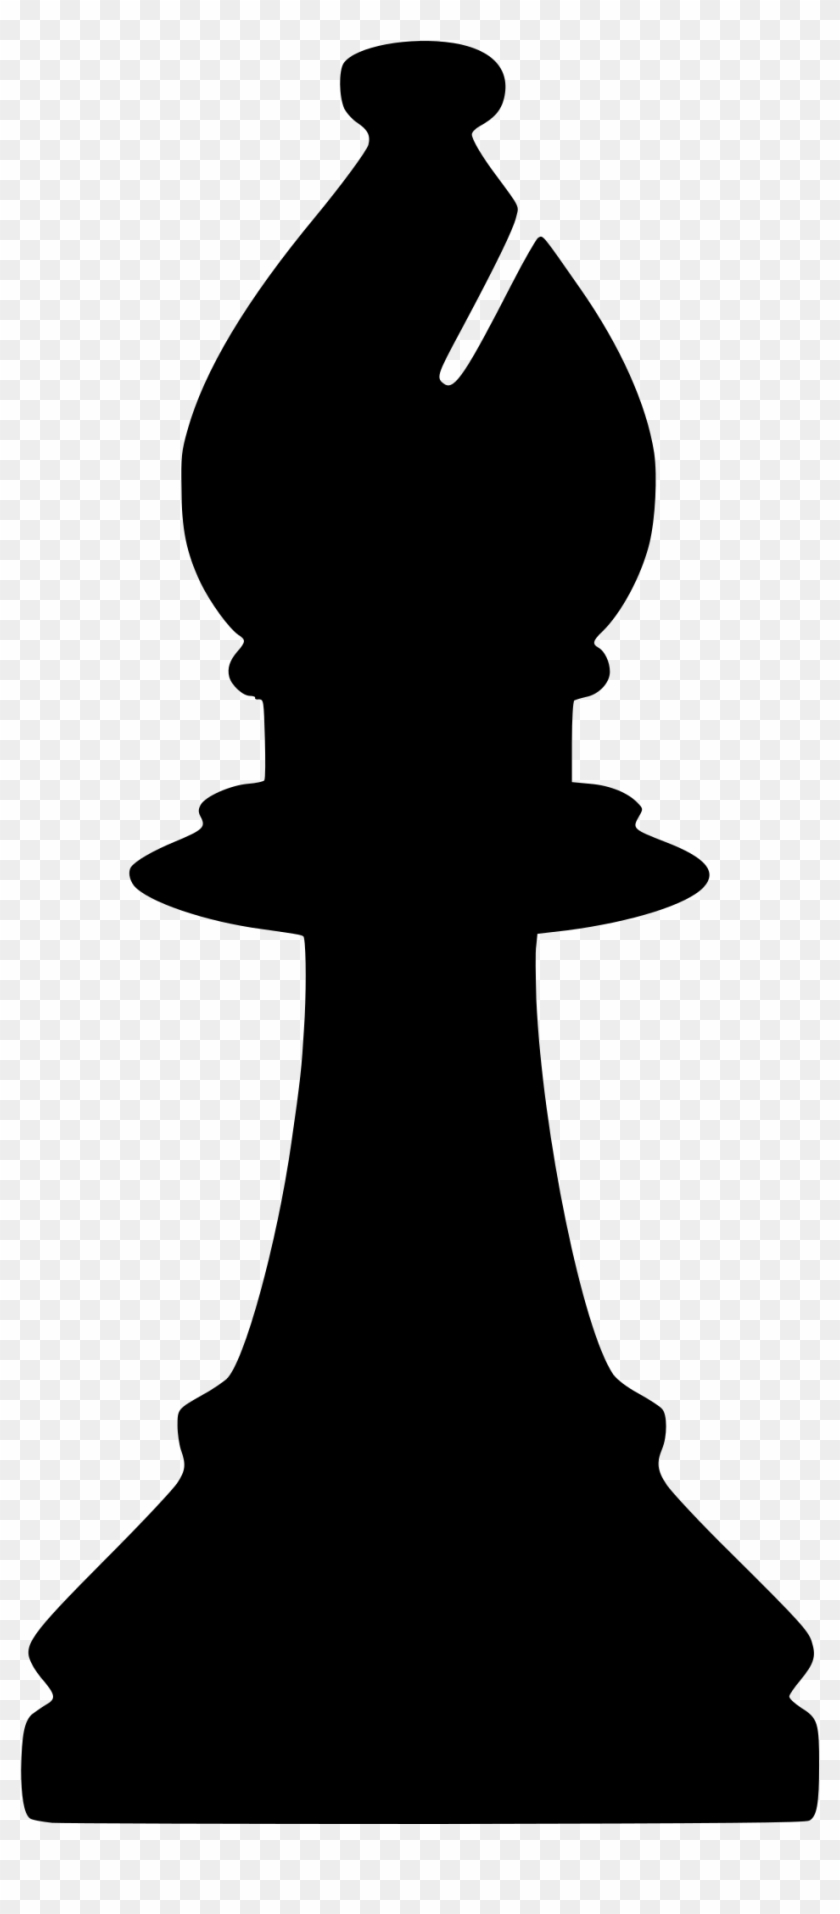 Chess Piece Remix Bishop / Alfil - Chess Piece Remix Bishop / Alfil #1414089